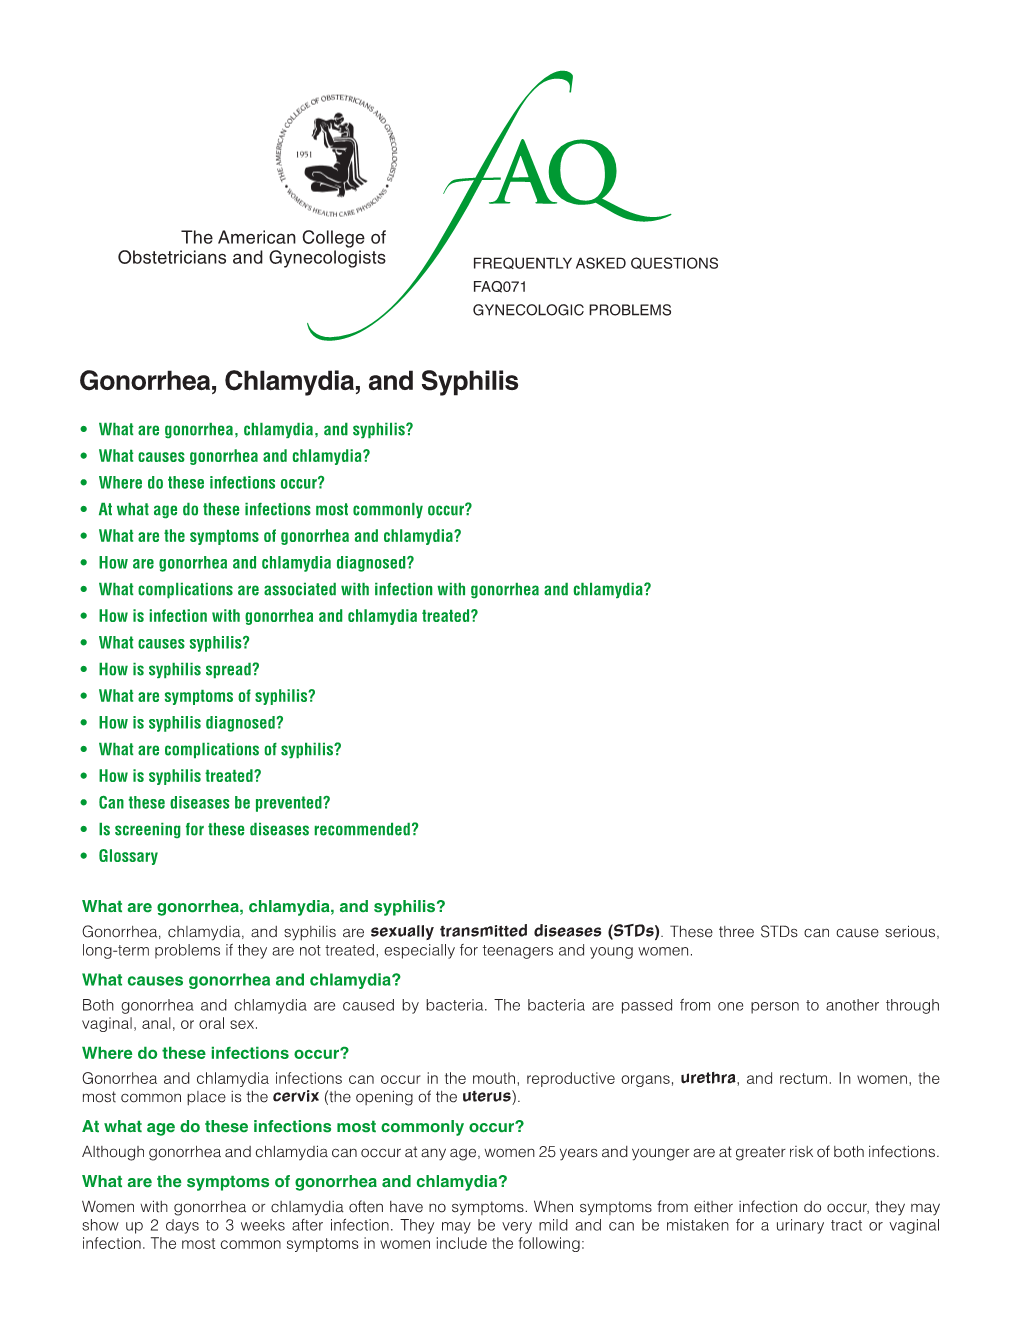 FAQ071 -- Gonorrhea, Chlamydia, and Syphilis